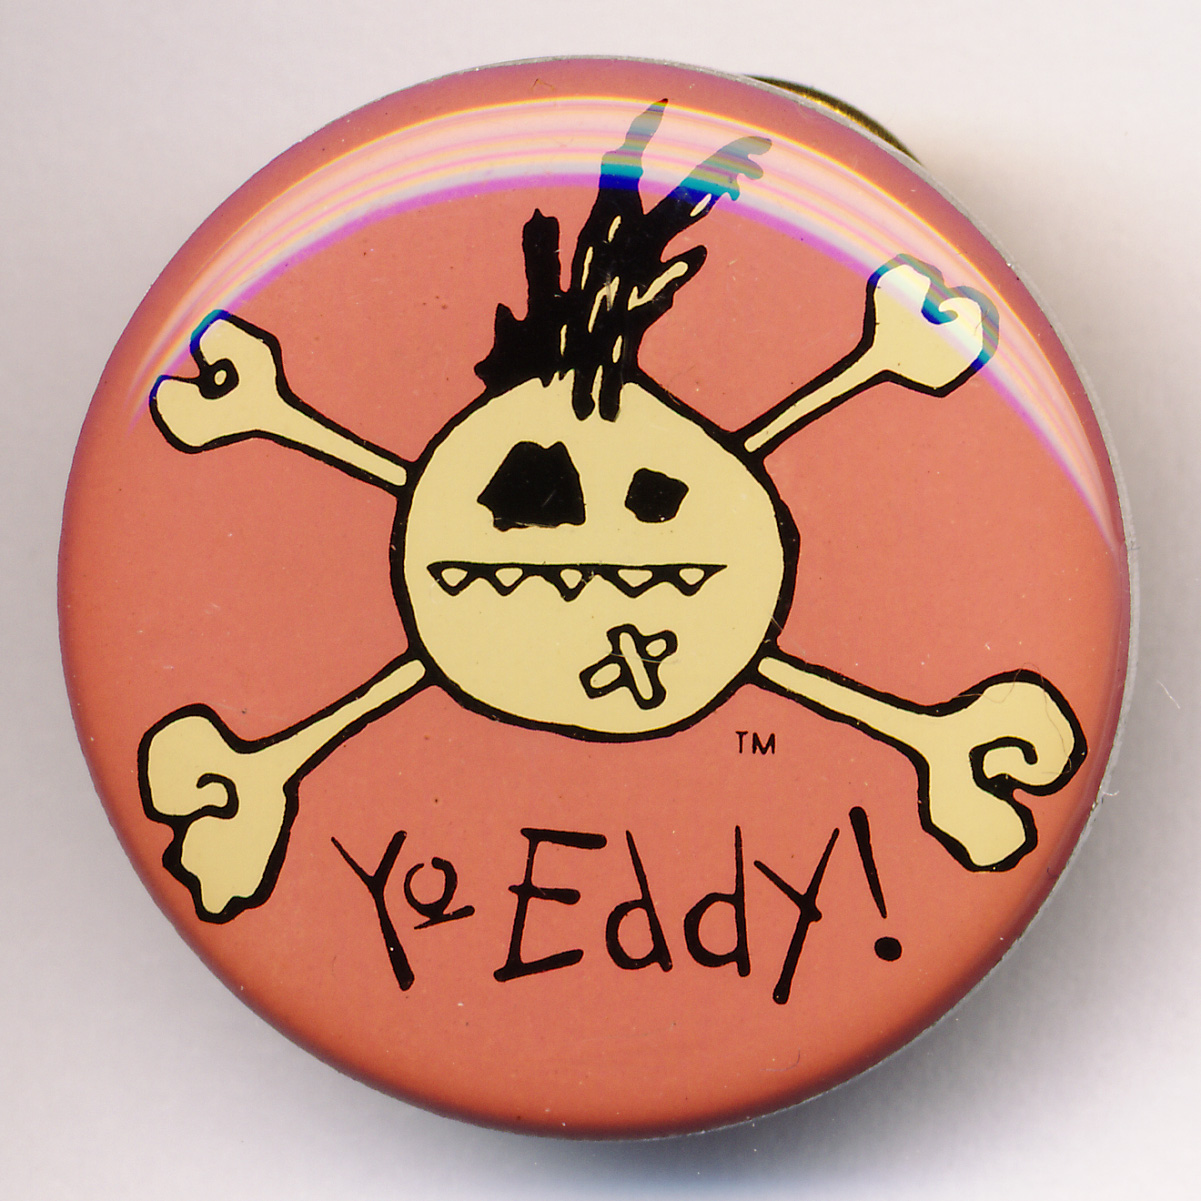 Yo Eddy - New.jpg